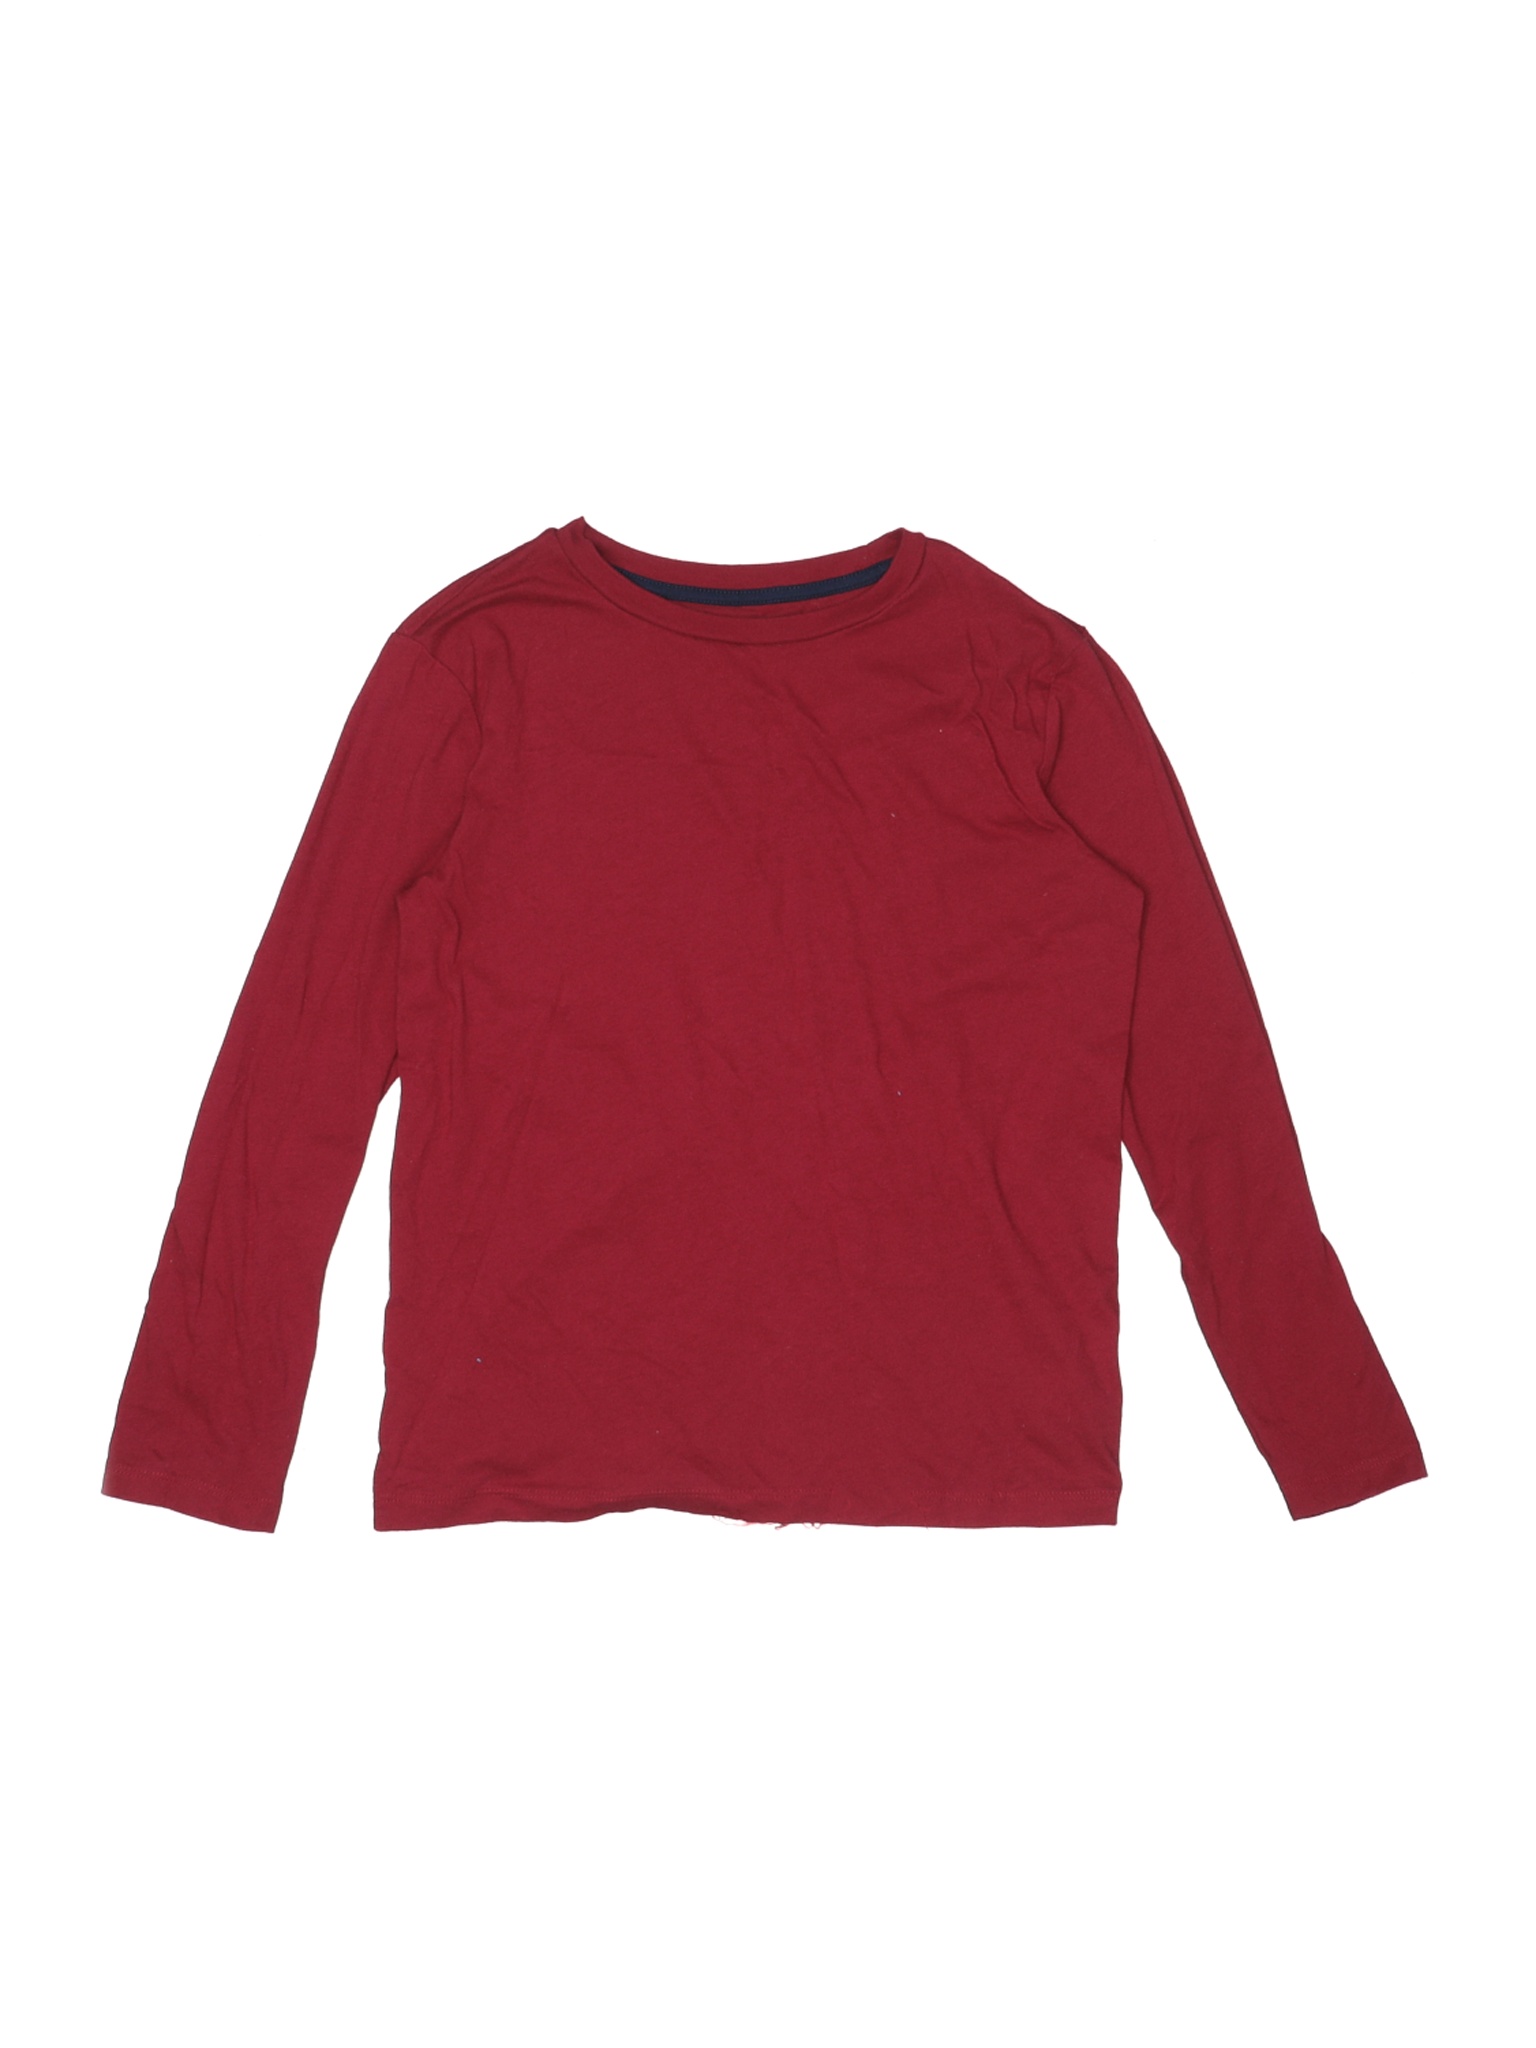 Old Navy Boys Red Long Sleeve T-Shirt 10 | eBay